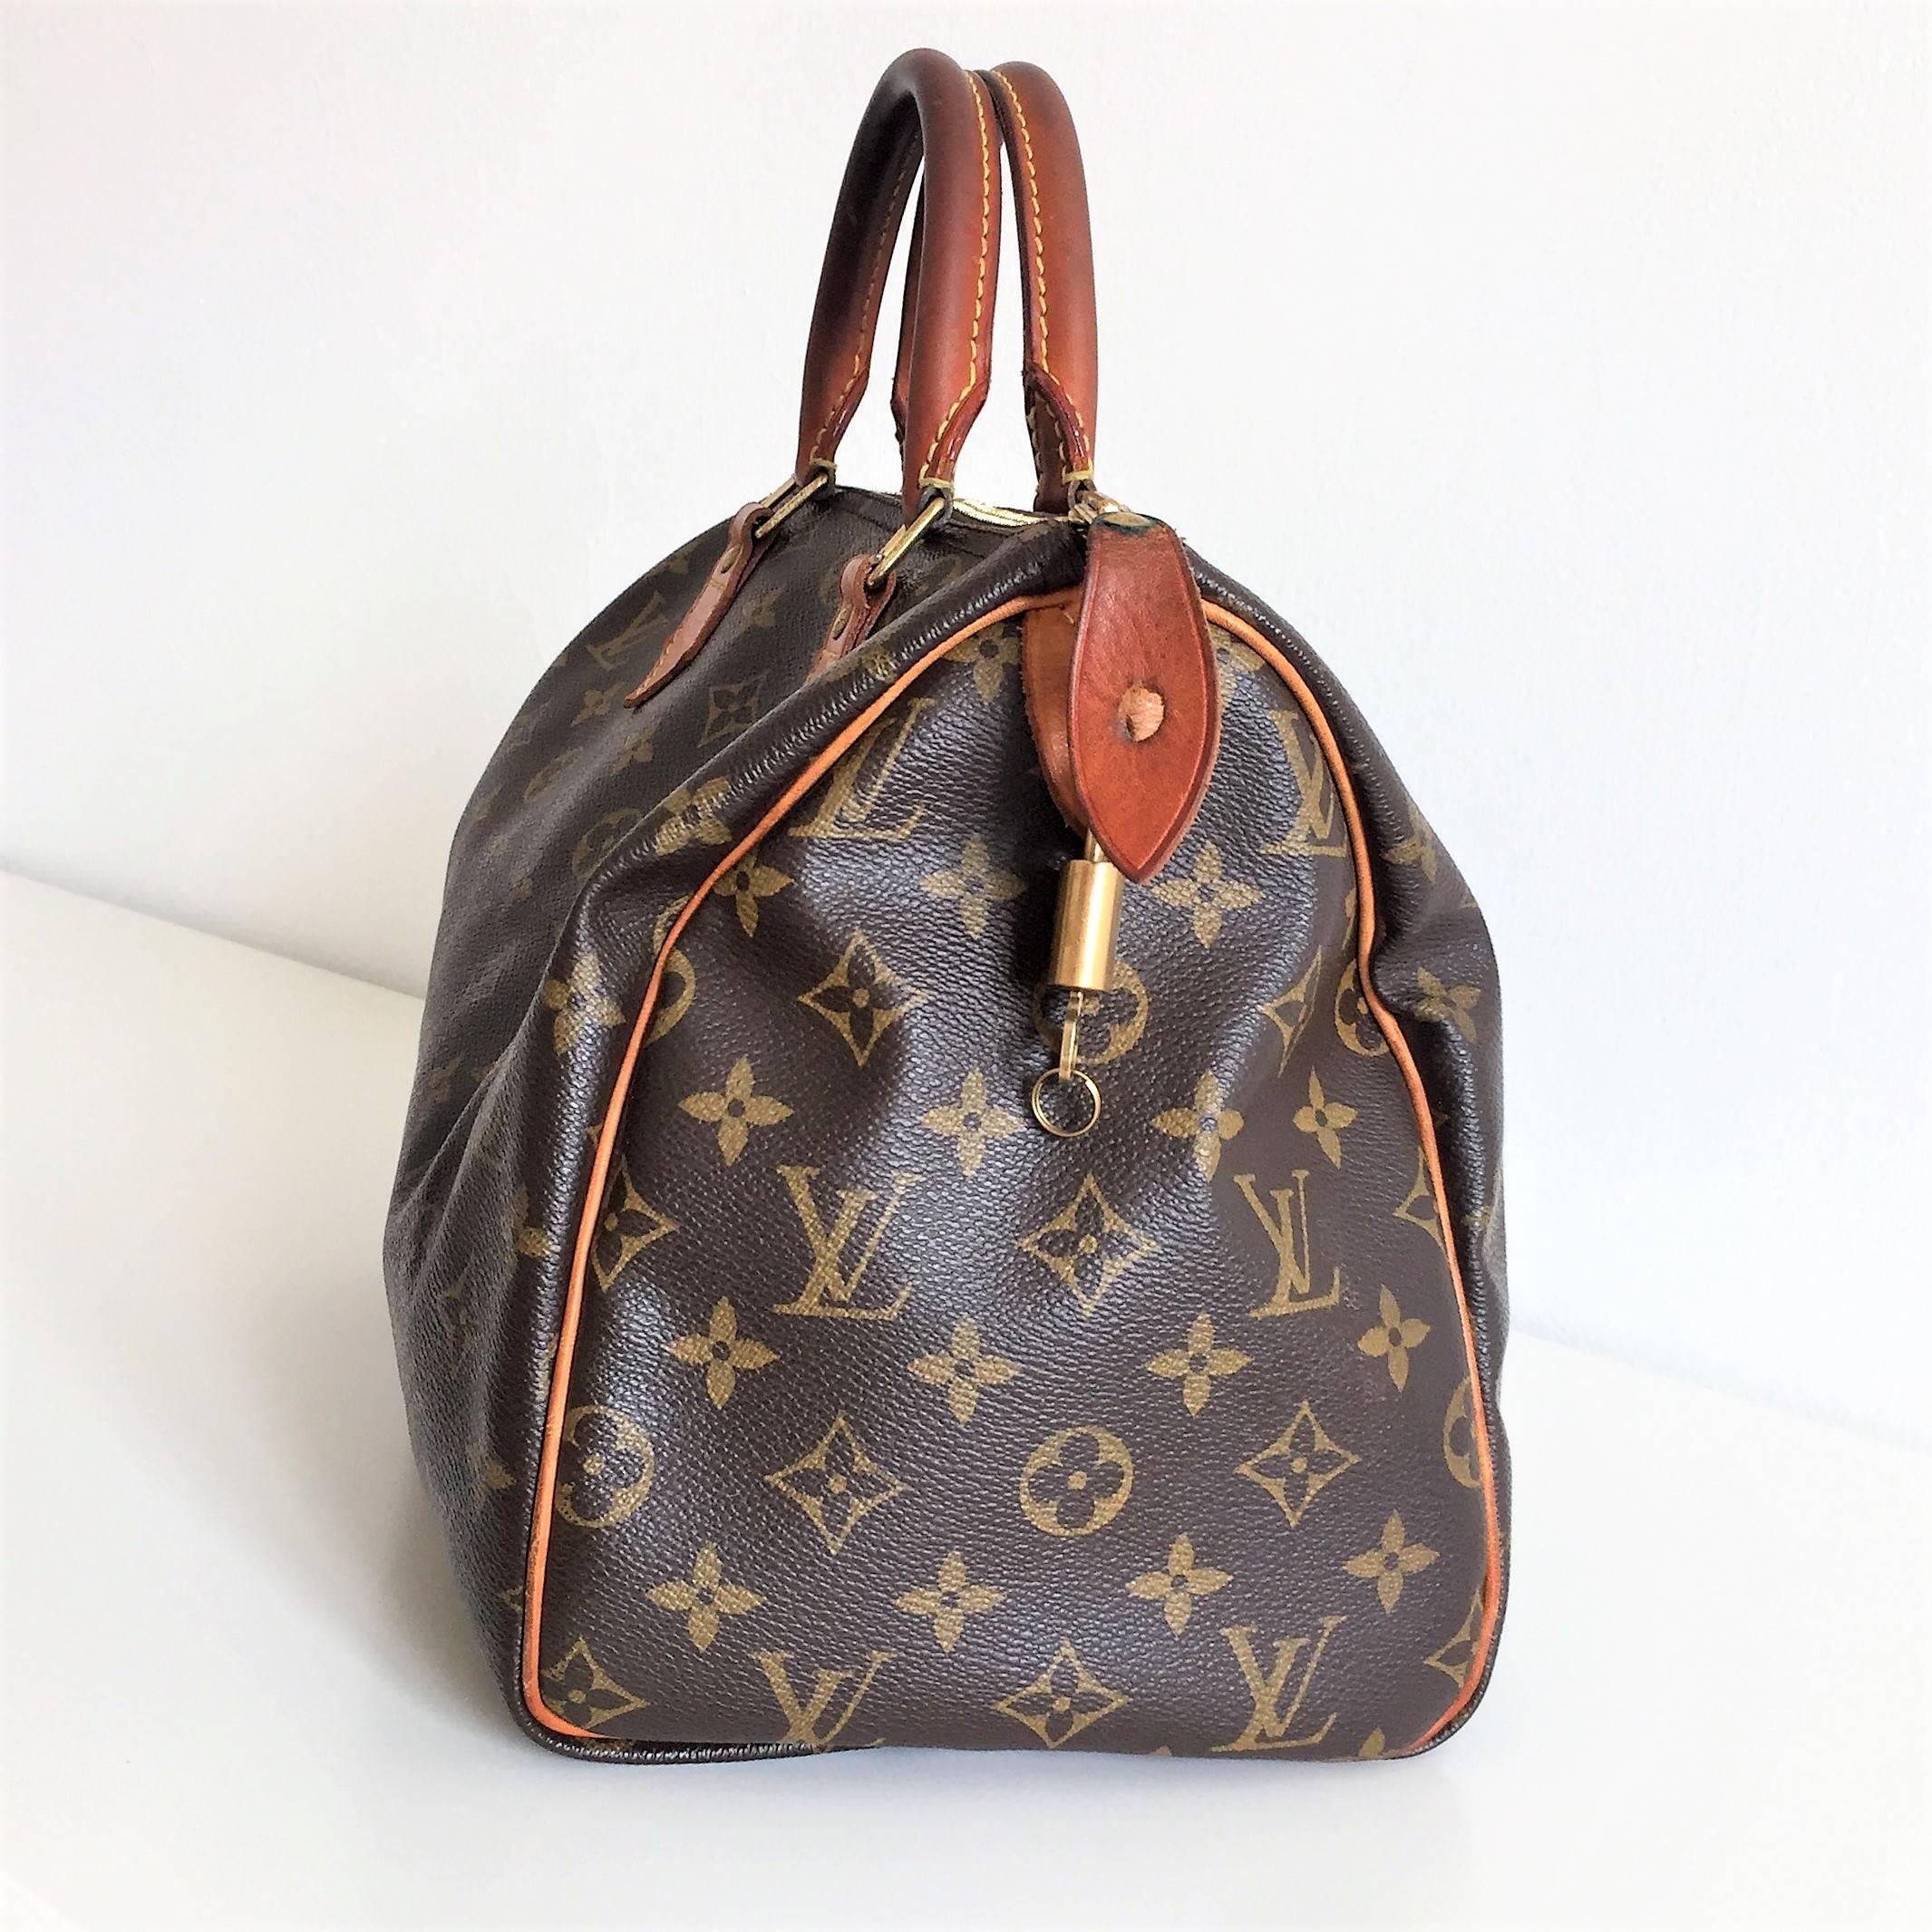 Louis Vuitton Speedy 30 Monogram Handbag Purse In Good Condition For Sale In Milan, IT